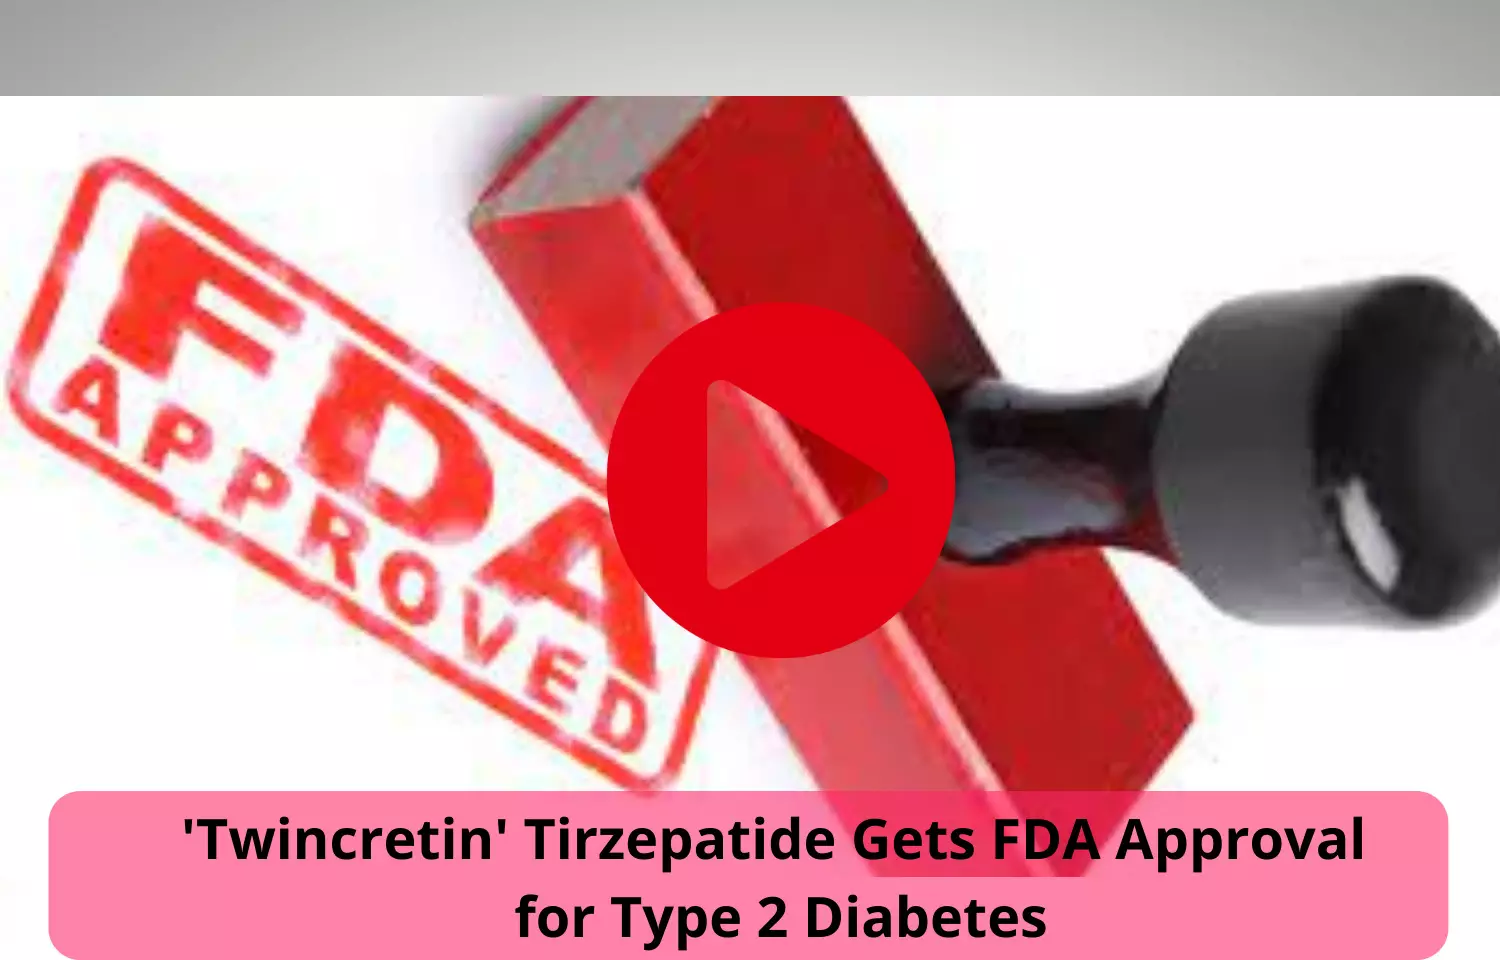 Twincretin Tirzepatide Recieves FDA Approval for Type 2 Diabetes